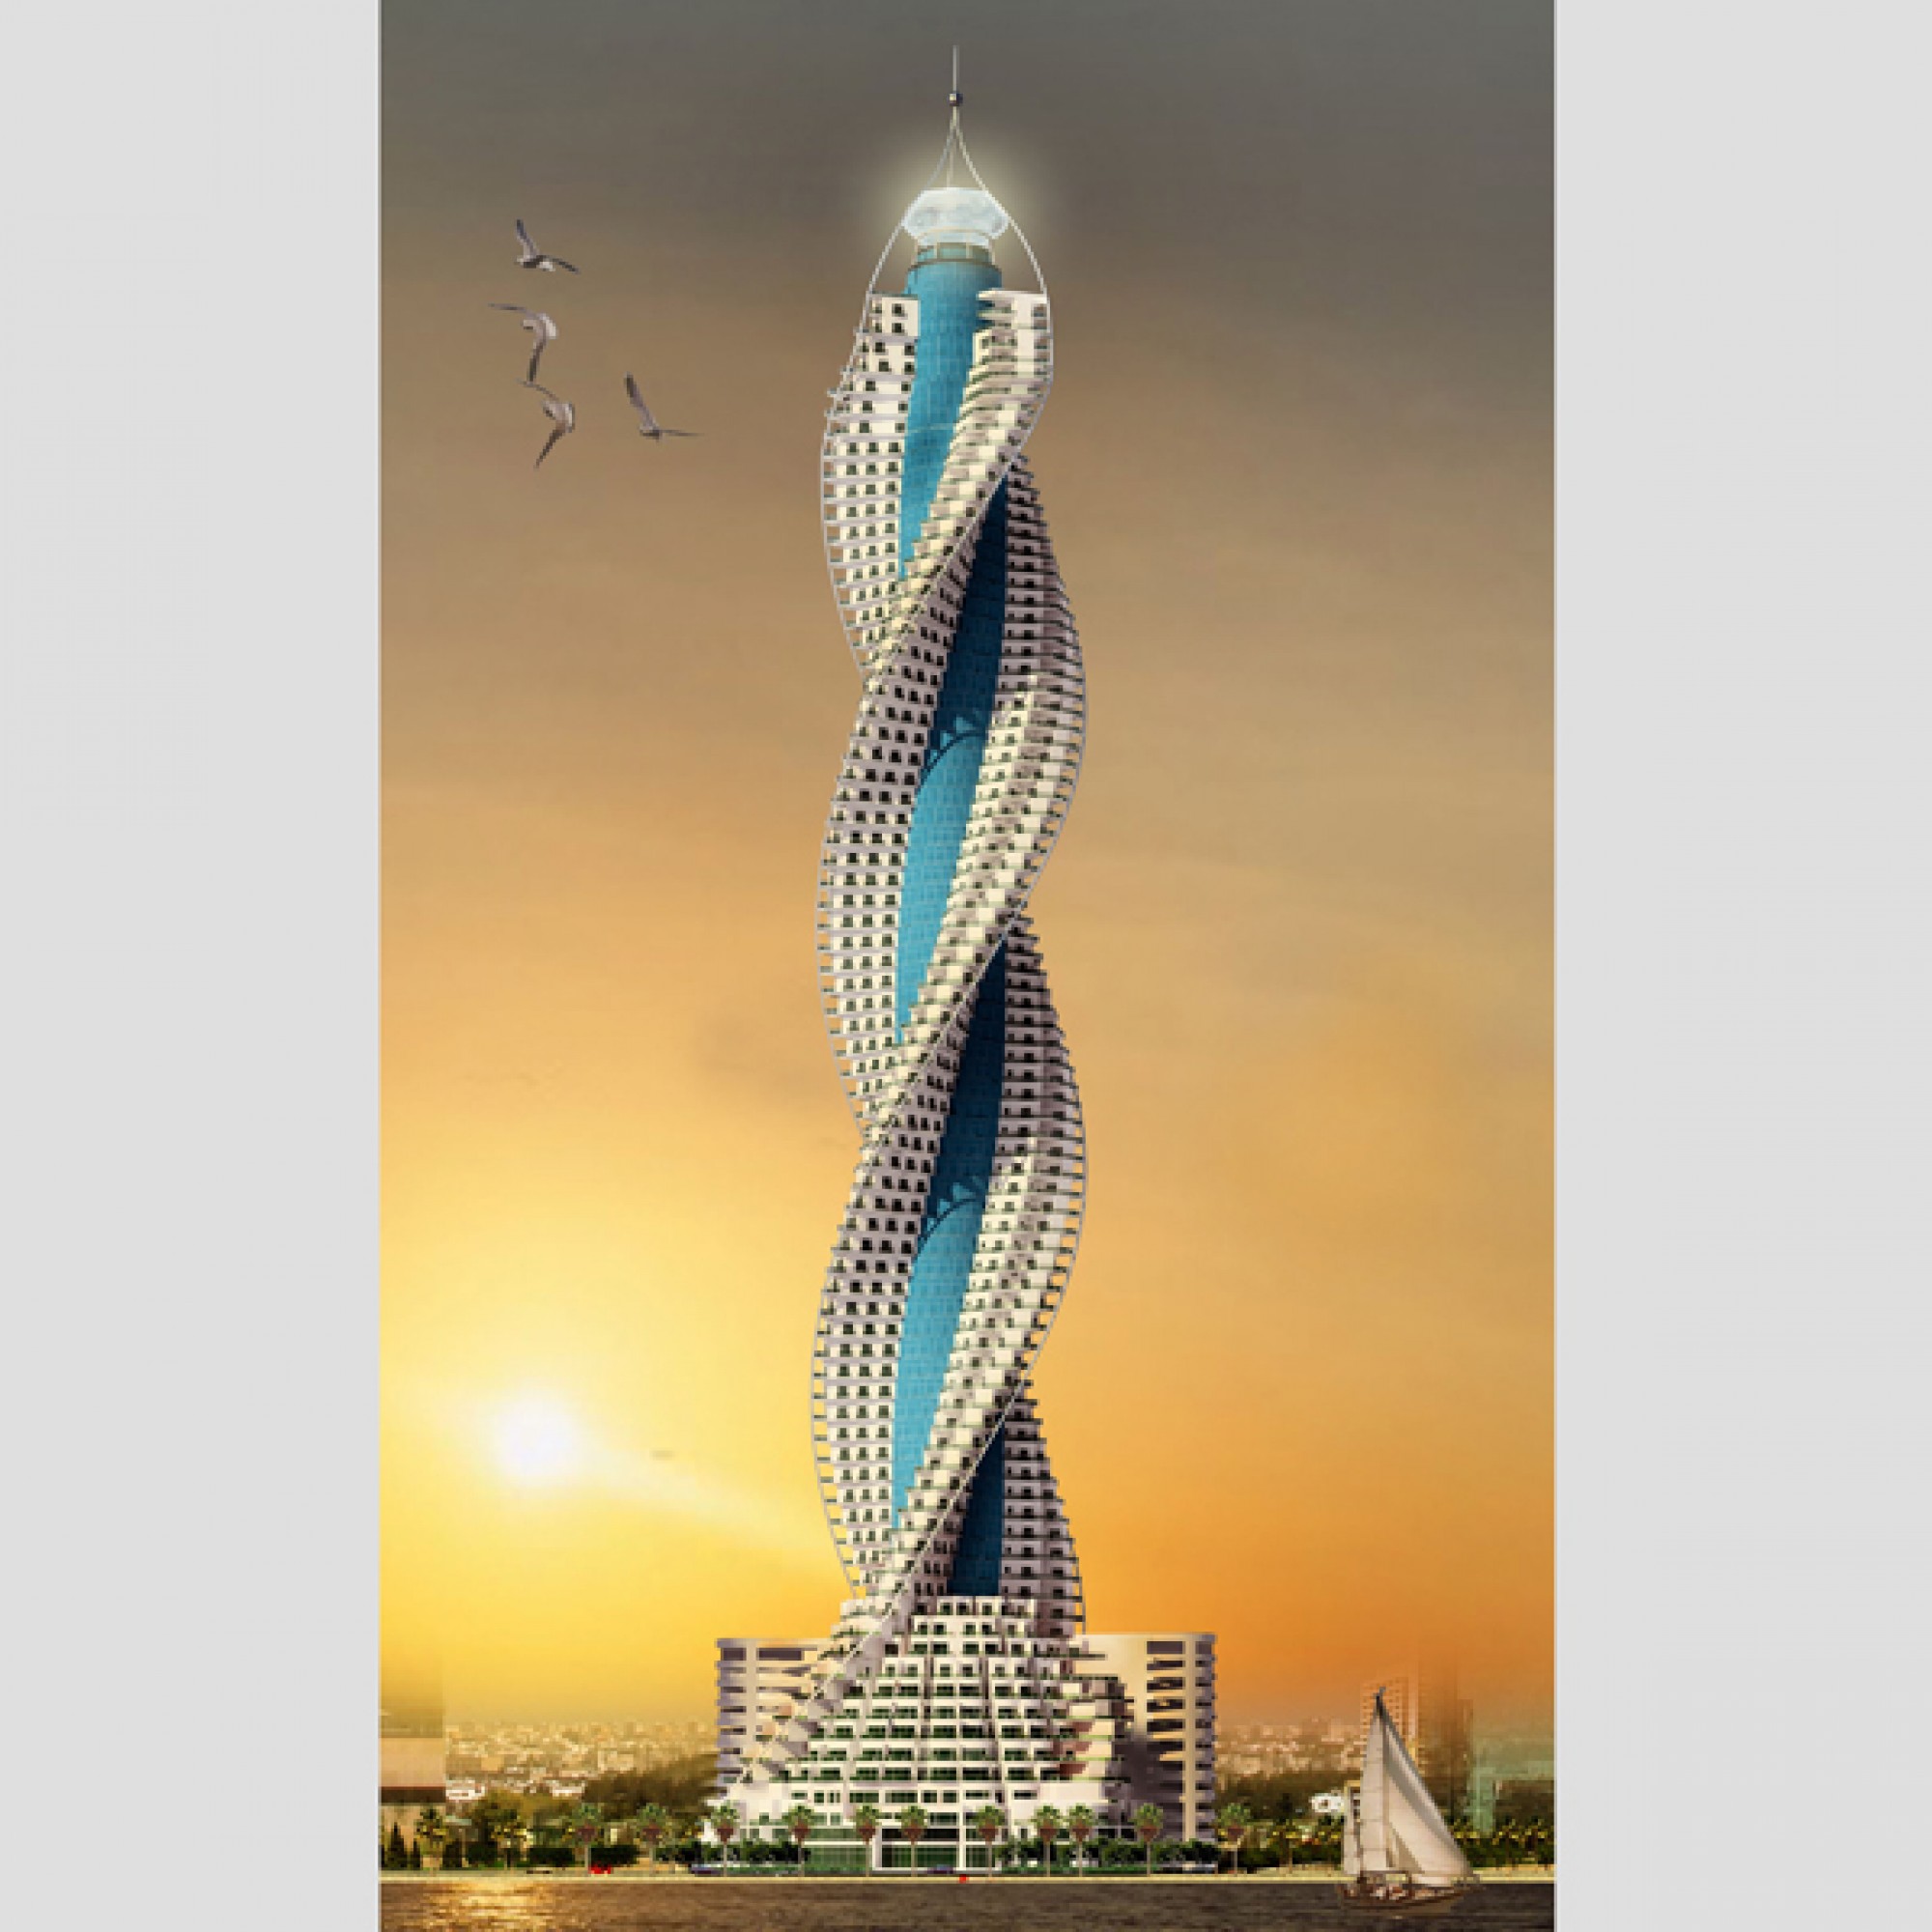  Rang 3, Diamond Tower, Dschidda, Saudi Arabien, Fertigstellung voraussichtlich 2019,  432 Meter hoch, 93 Stockwerke, Rotation total 360 Grad, Rotation pro Etage 3.847  Grad. (zvg)  